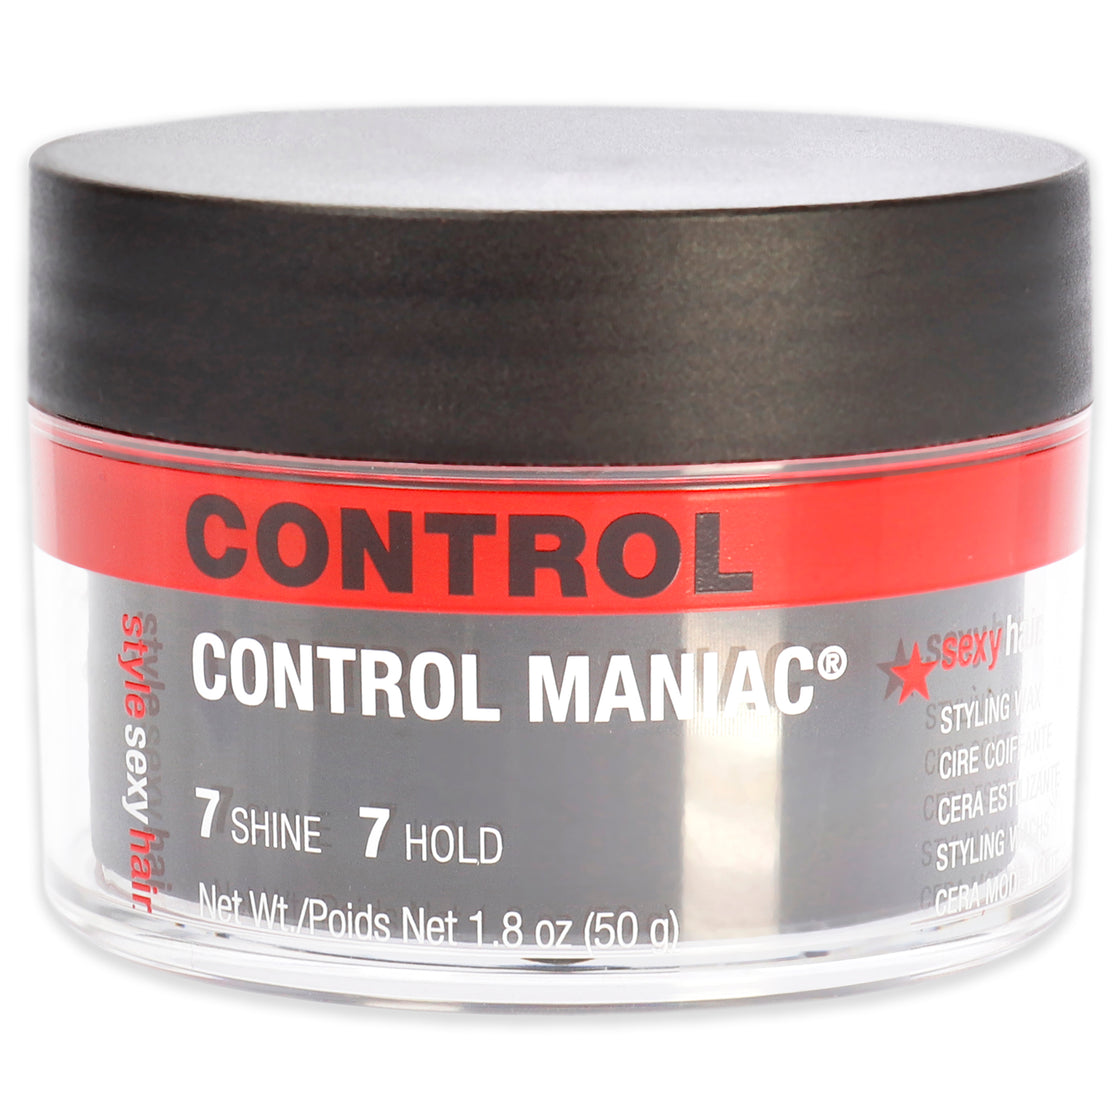 Sexy Hair Control Maniac Wax by Sexy Hair for Unisex - 1.8 oz Wax